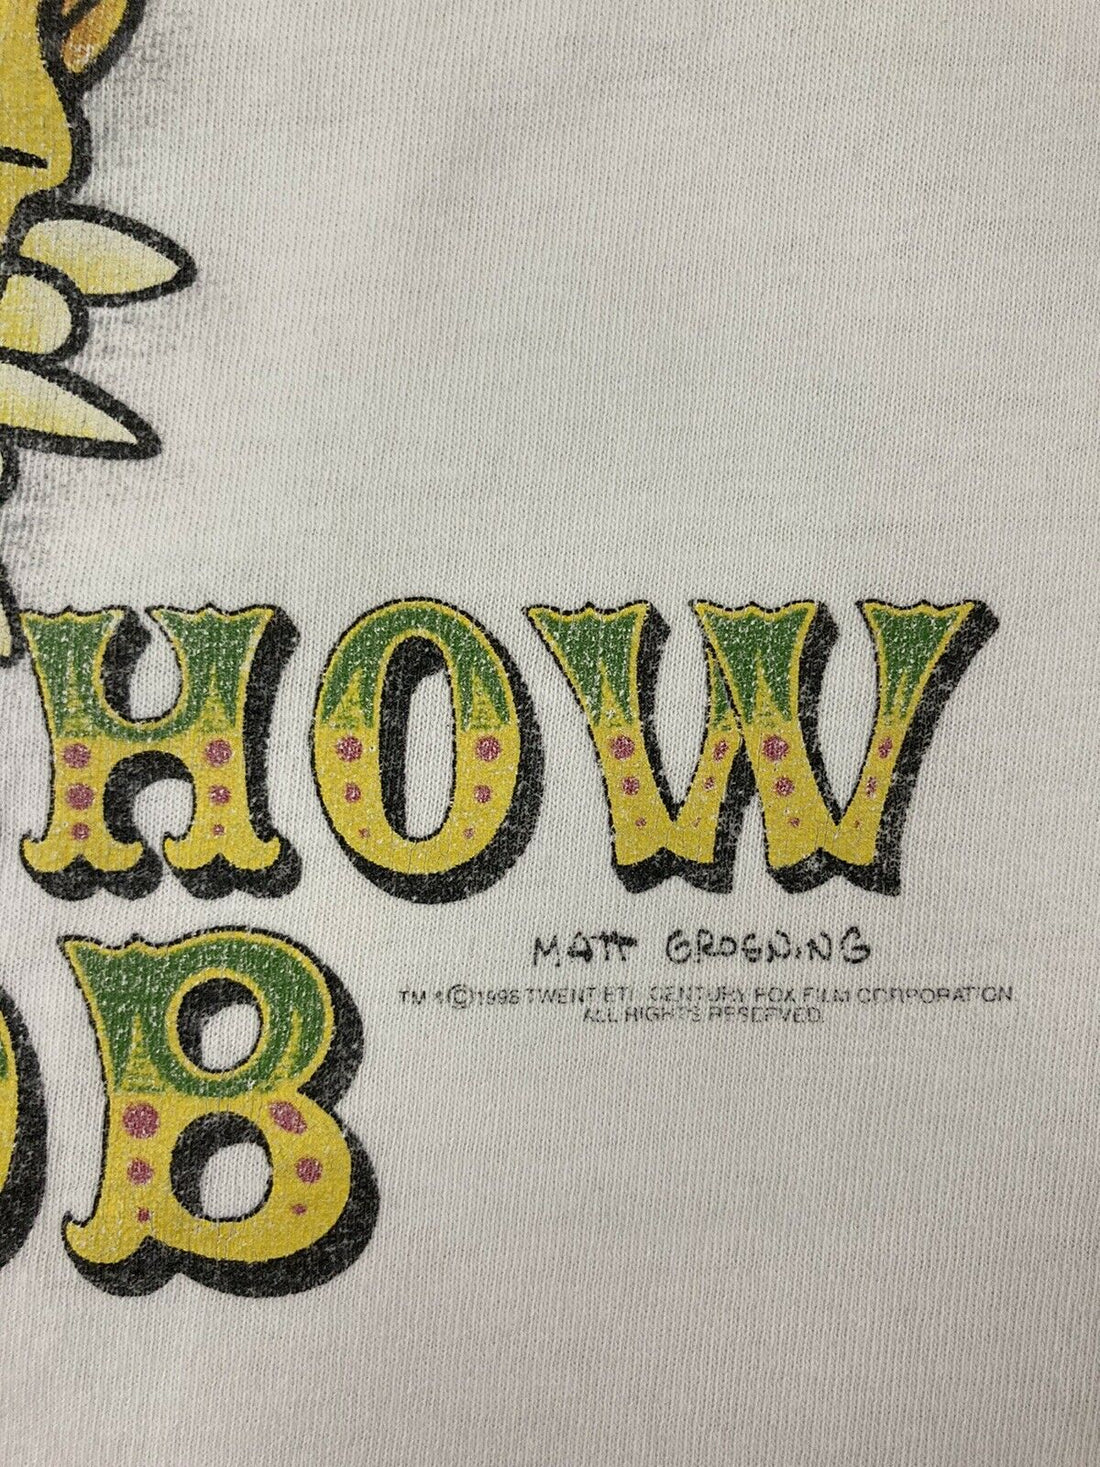 Vintage Sideshow Bob T-Shirt Size Large 1996 90s The Simpsons Matt Groening